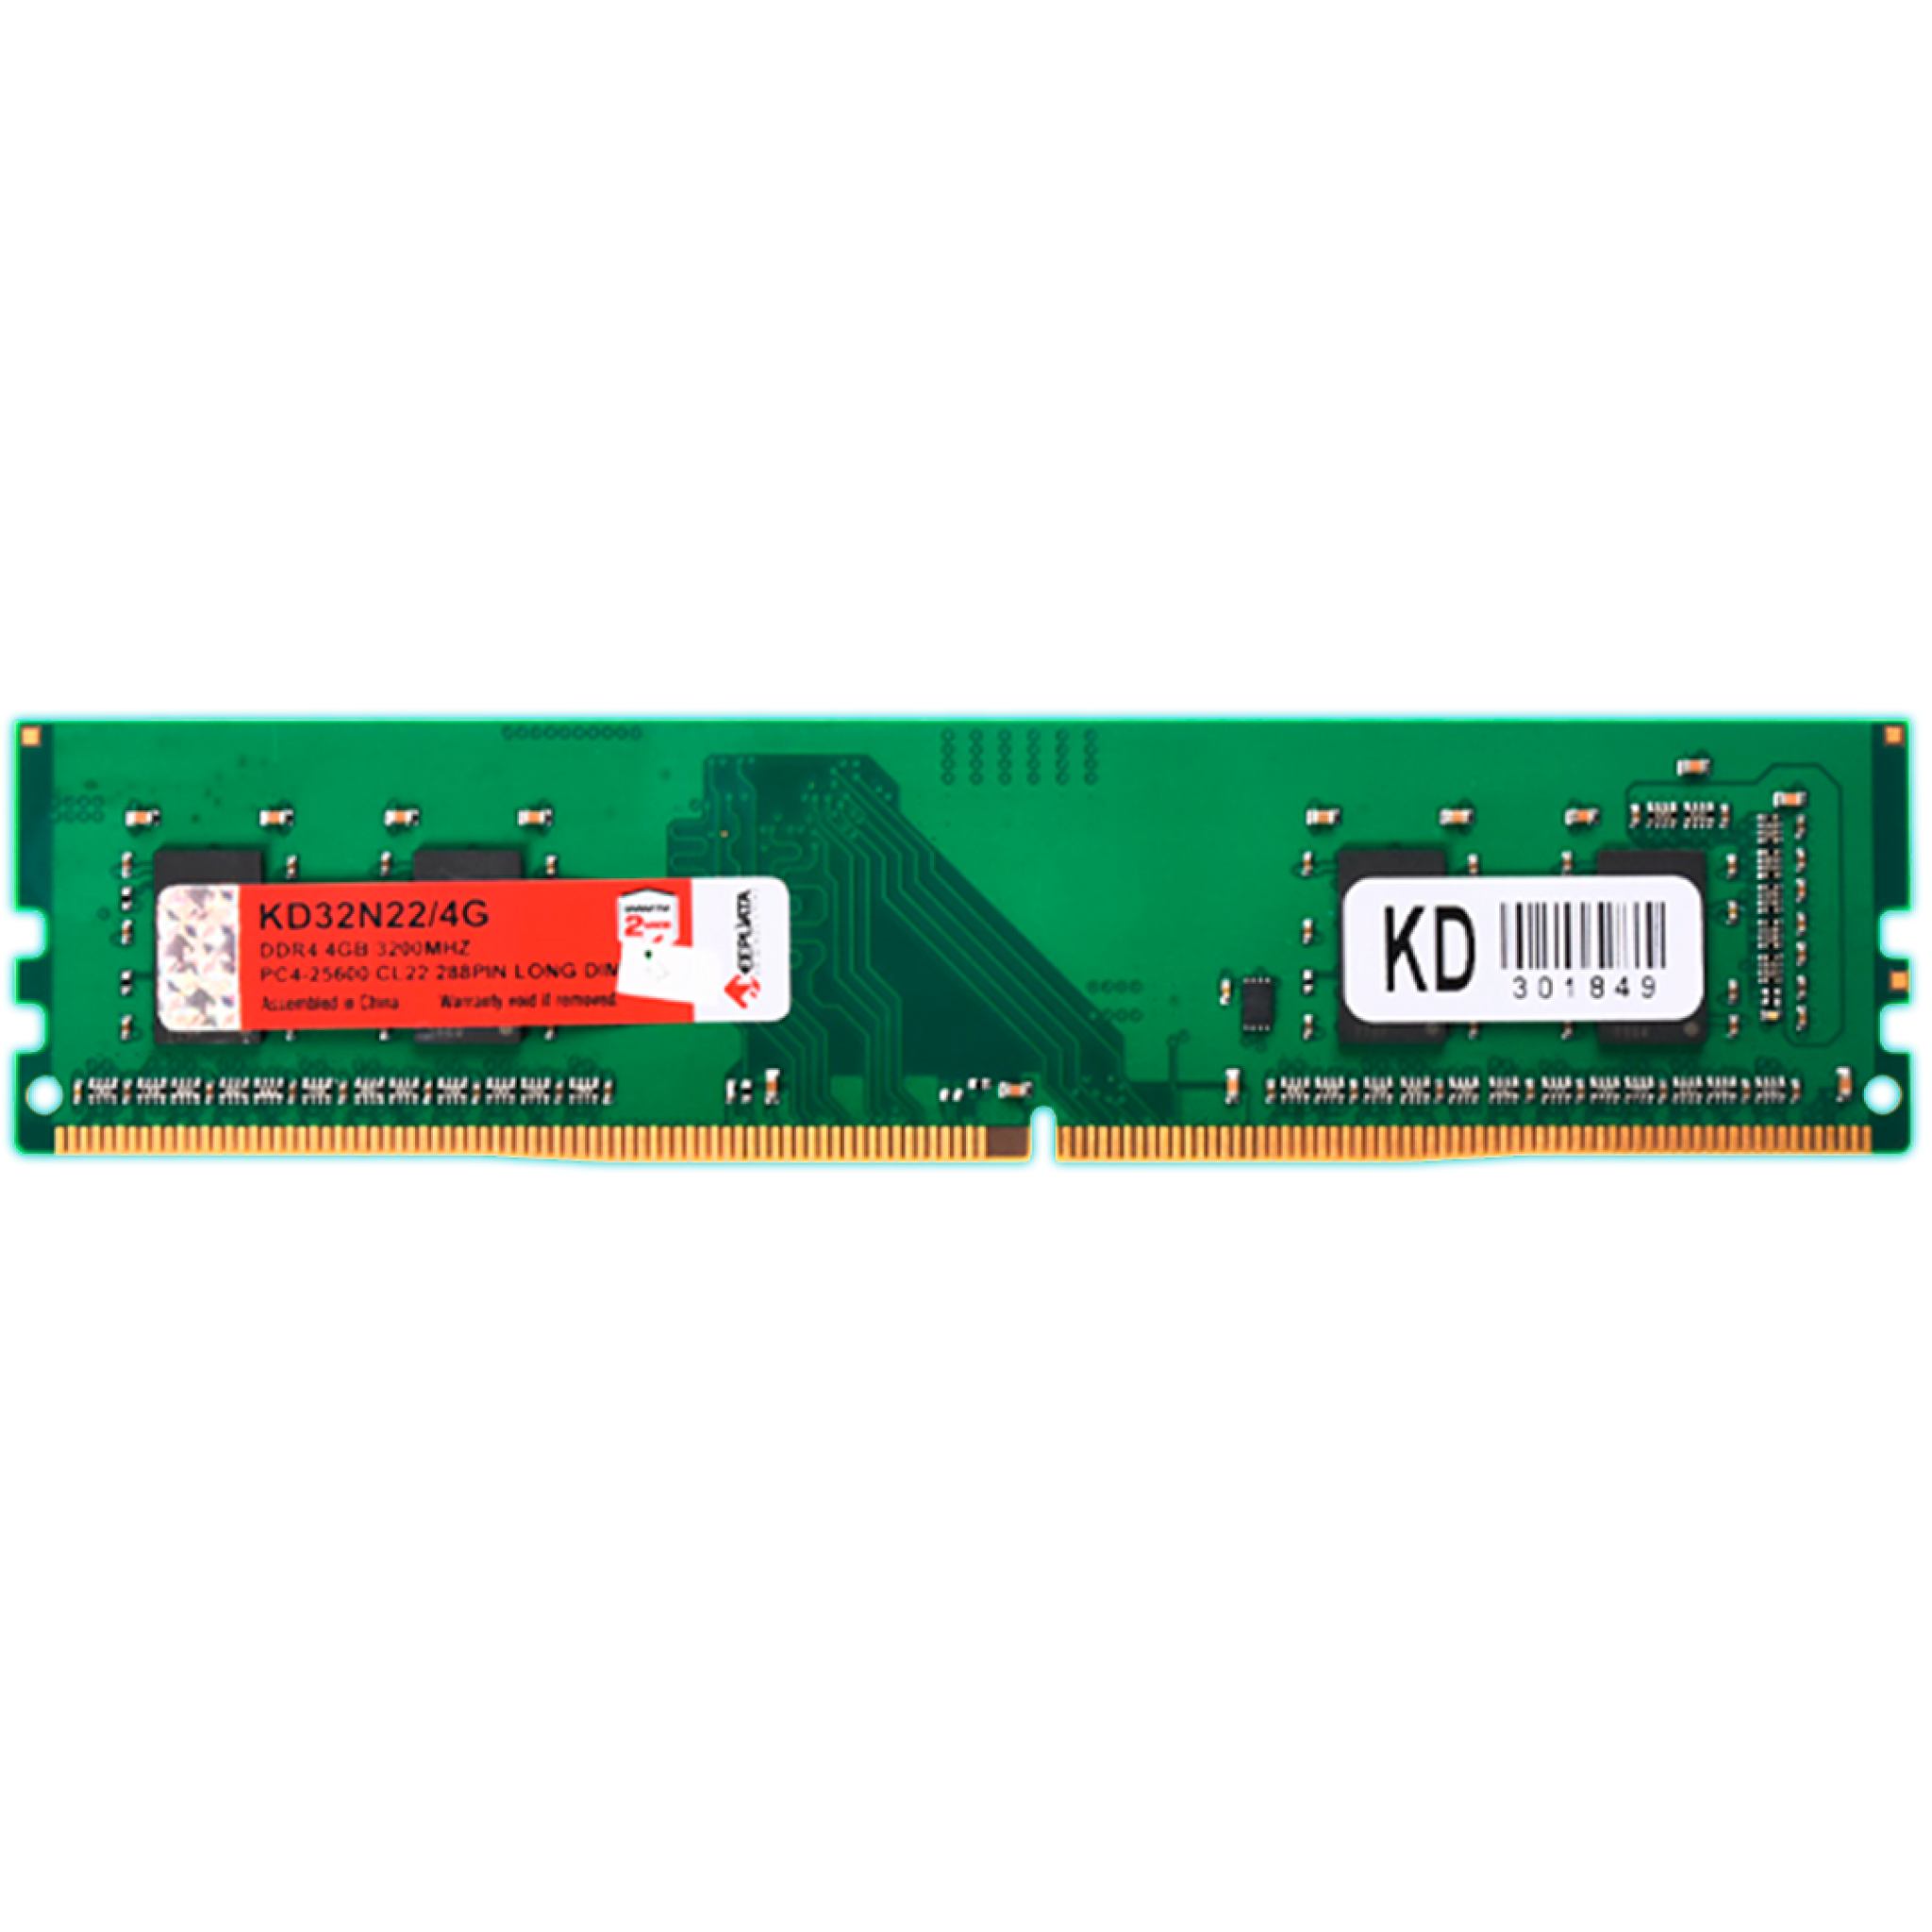 capoc repentinamente heroína MEMORIA RAM 4GB DDR4 3200MHZ KEEPDATA KD32N22/4G :: Serial Center